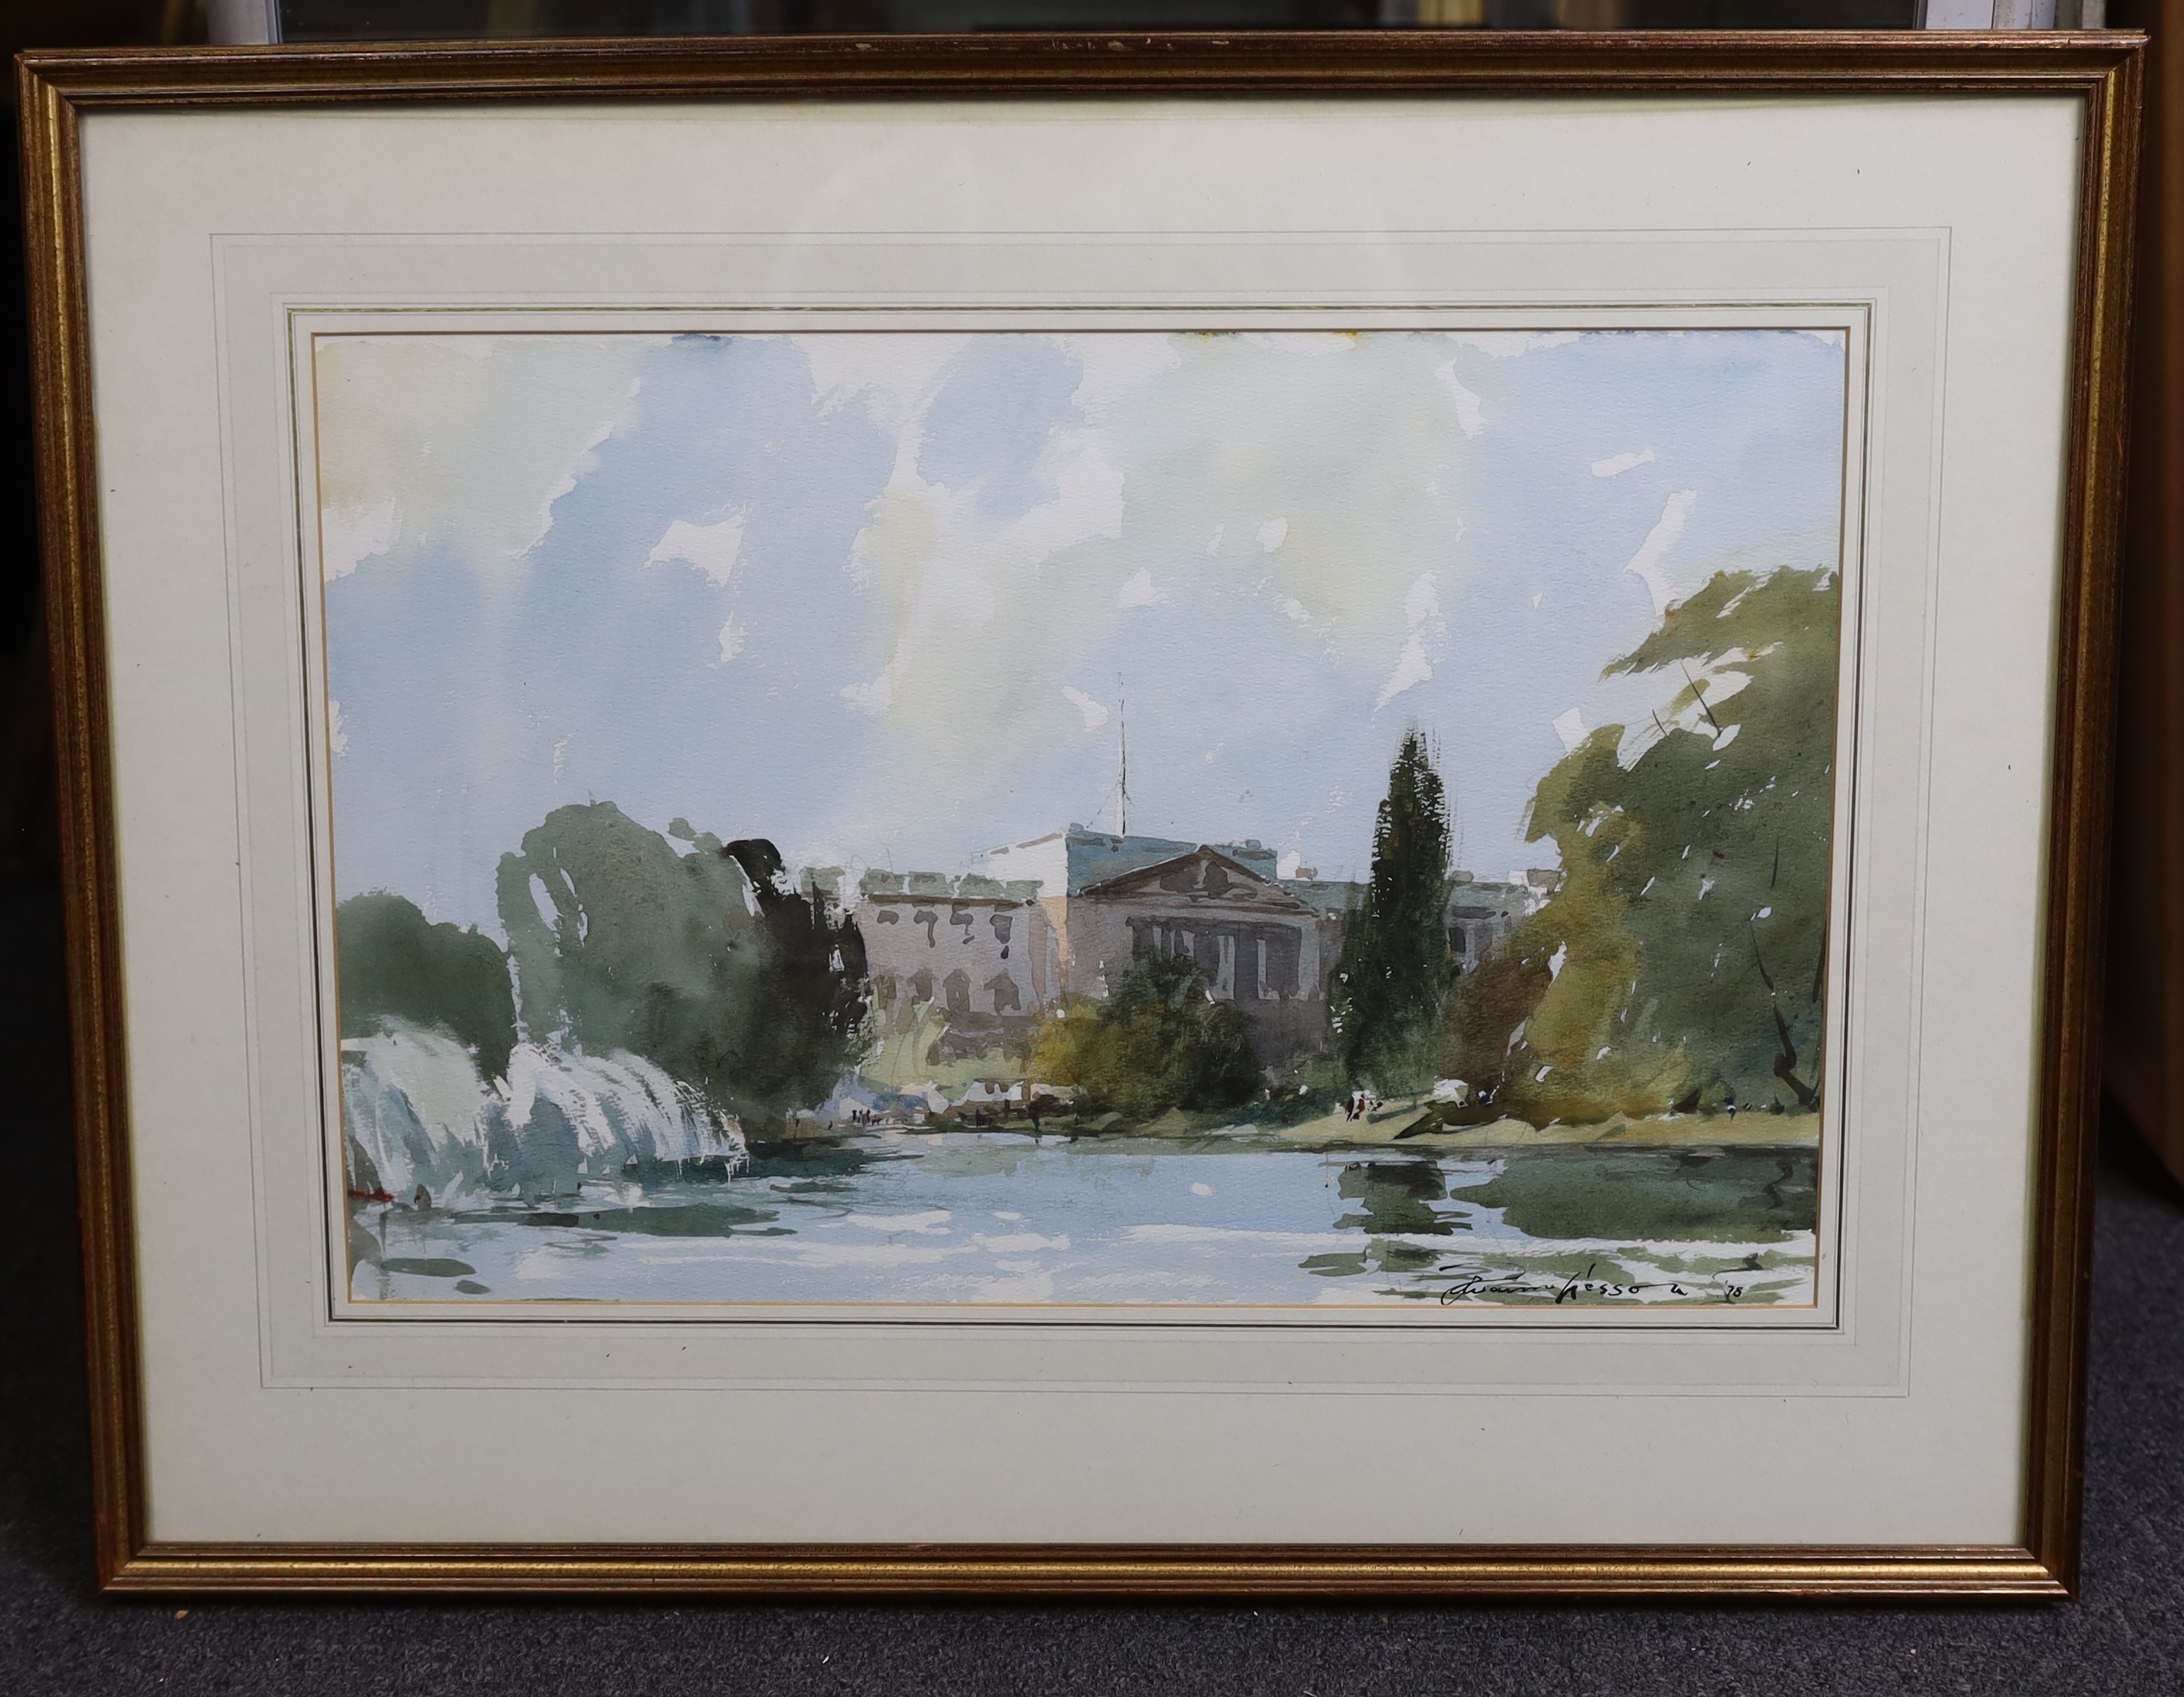 Edward Wesson (English, 1910-1983), Buckingham Palace, watercolour, 33 x 49cm